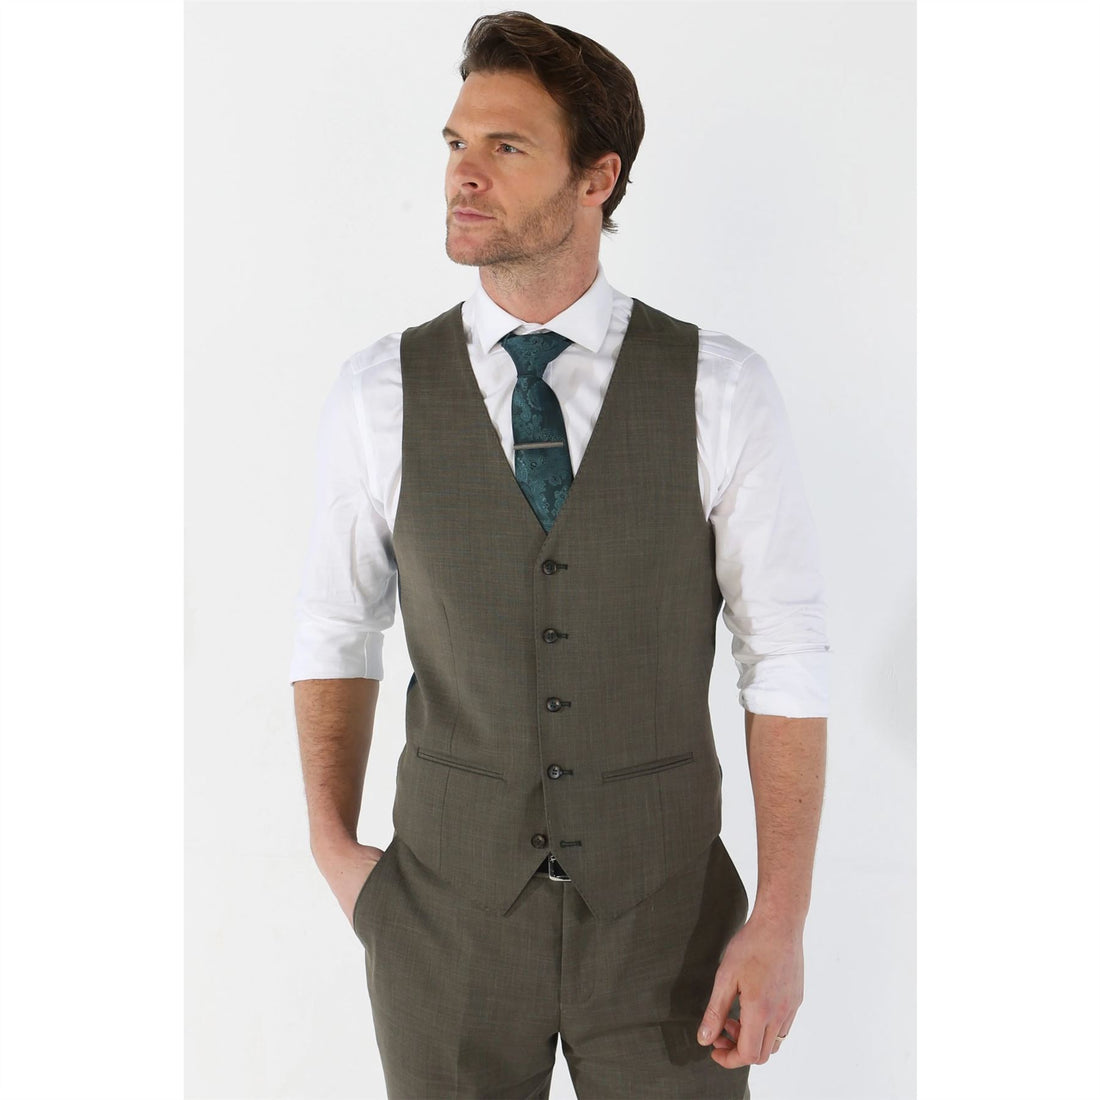 Men's Waistcoat Sage Green Tailored Fit Summer Wedding Vest